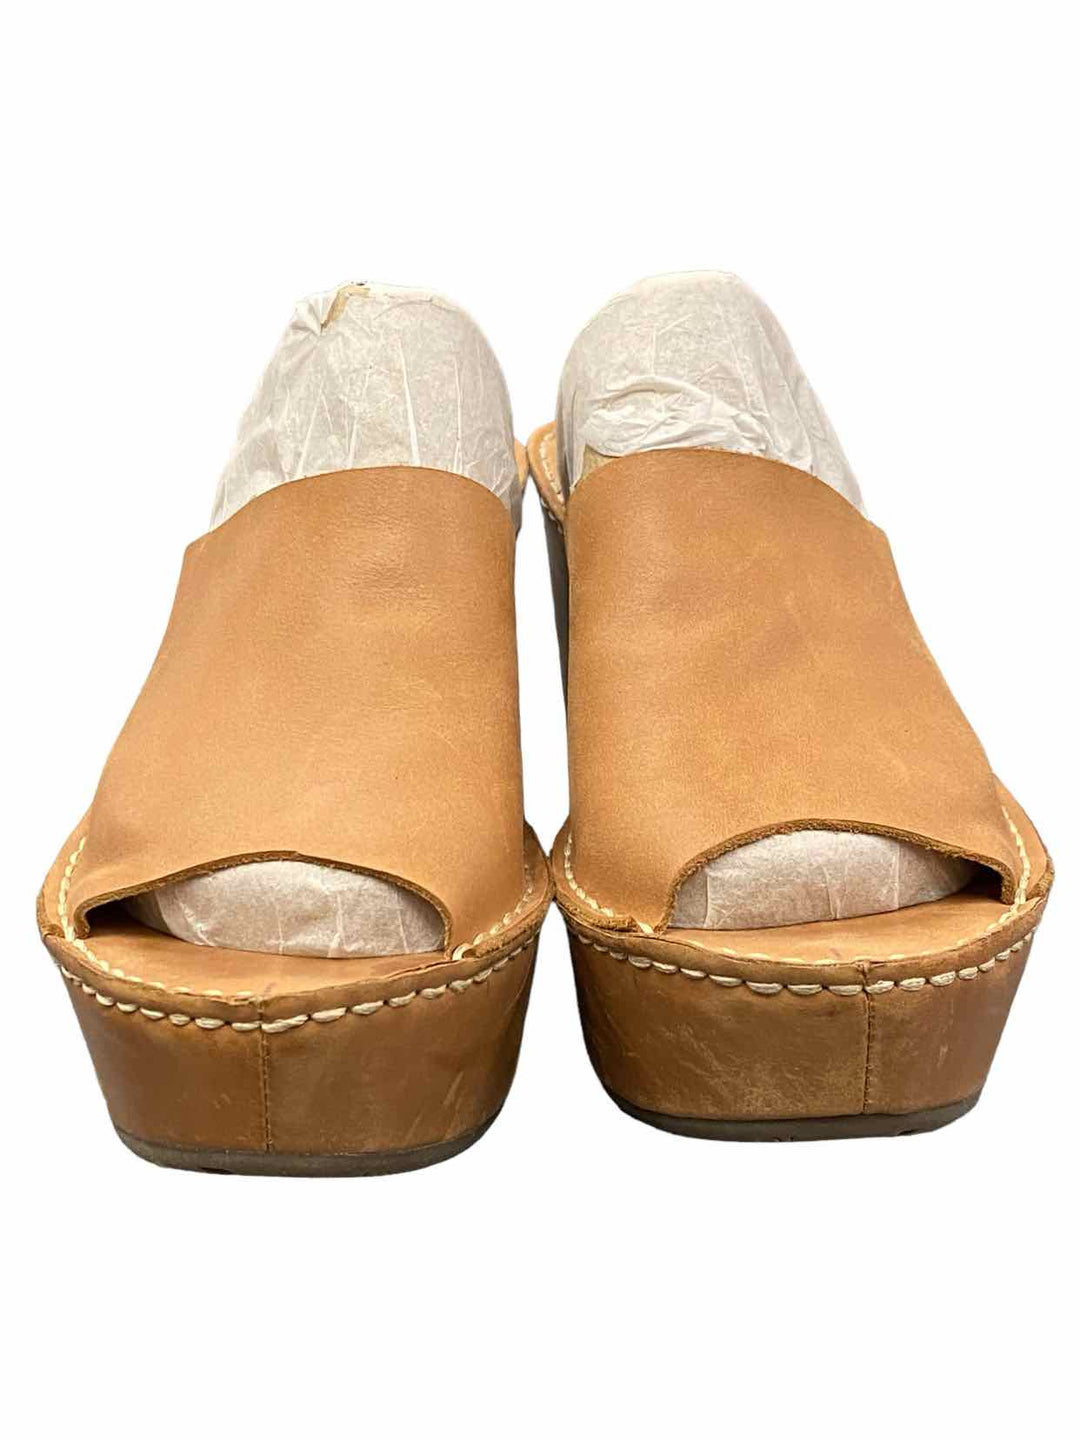 Chocolat Blu Shoe Size 6.5 Brown Leather Open Toe Heels